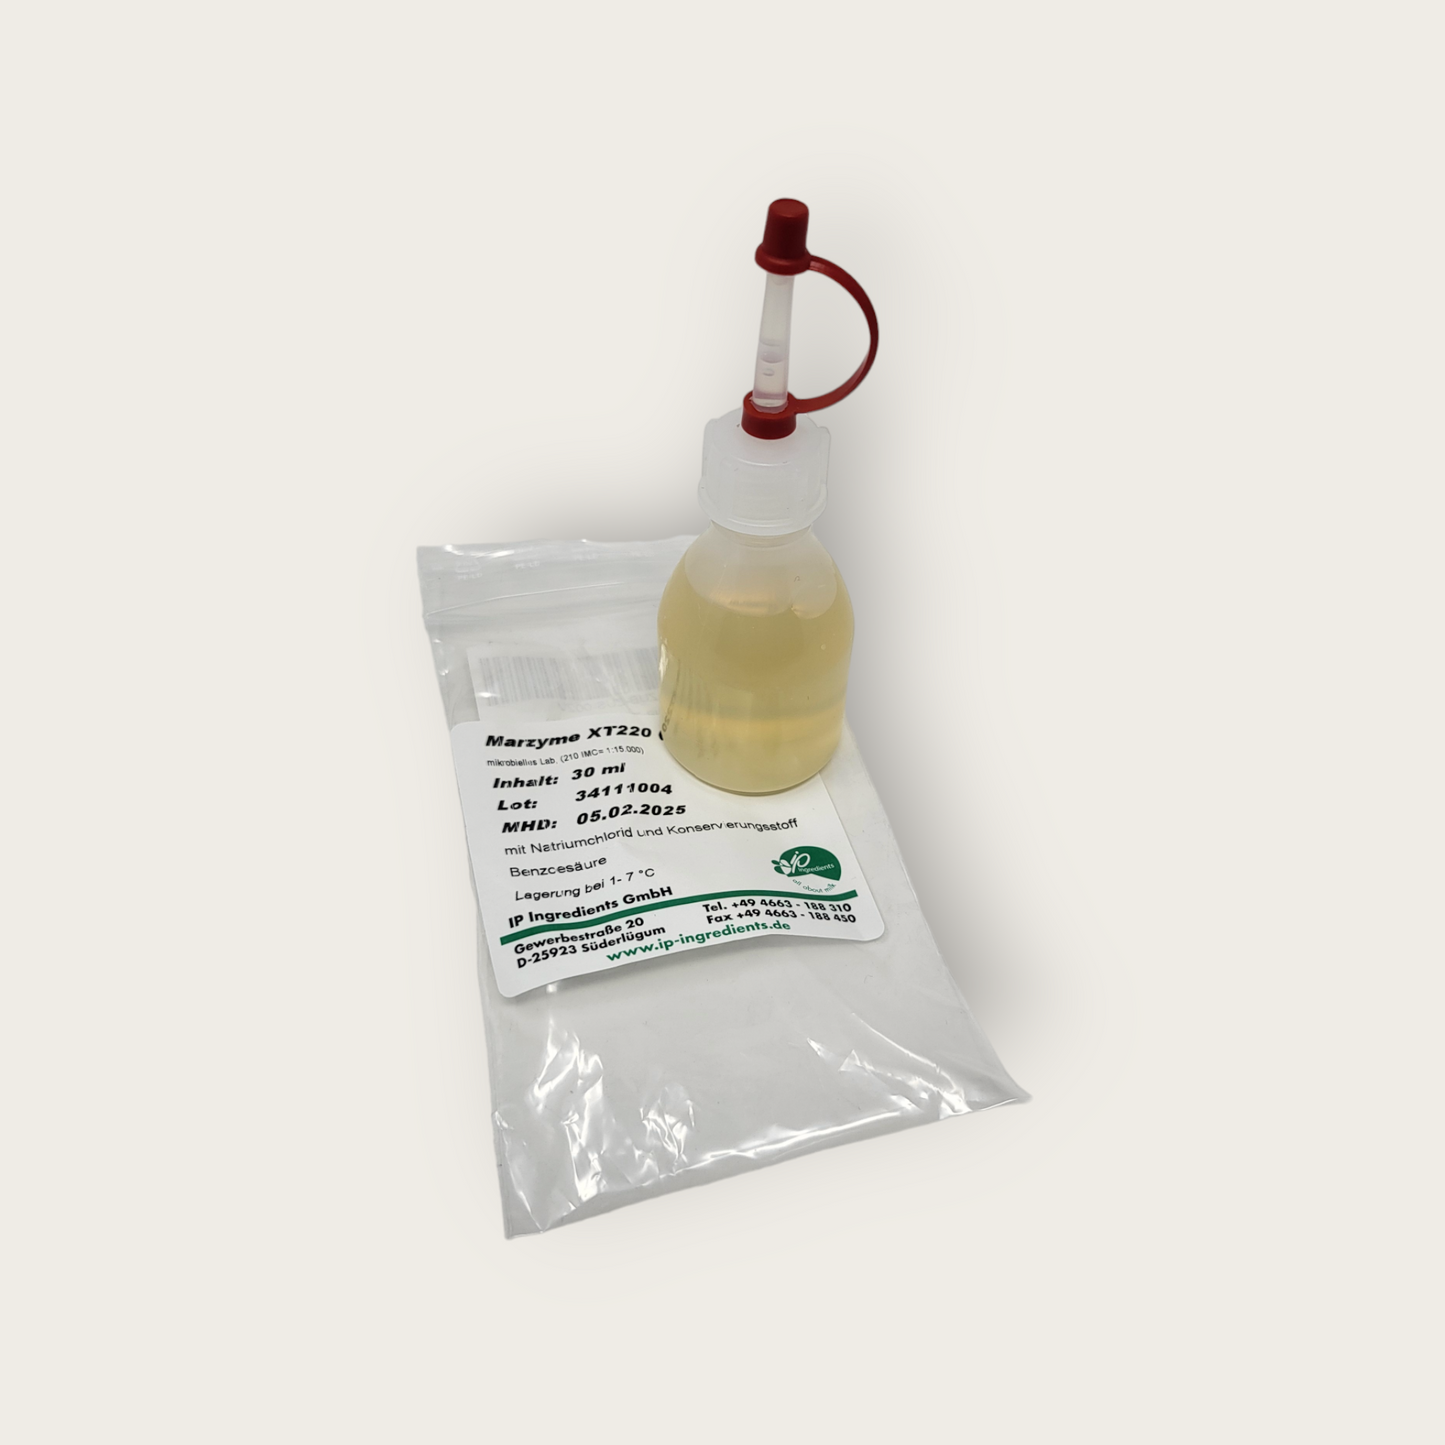 Lab - Marzyme XT220 (mikrobielles Lab) 30 ml